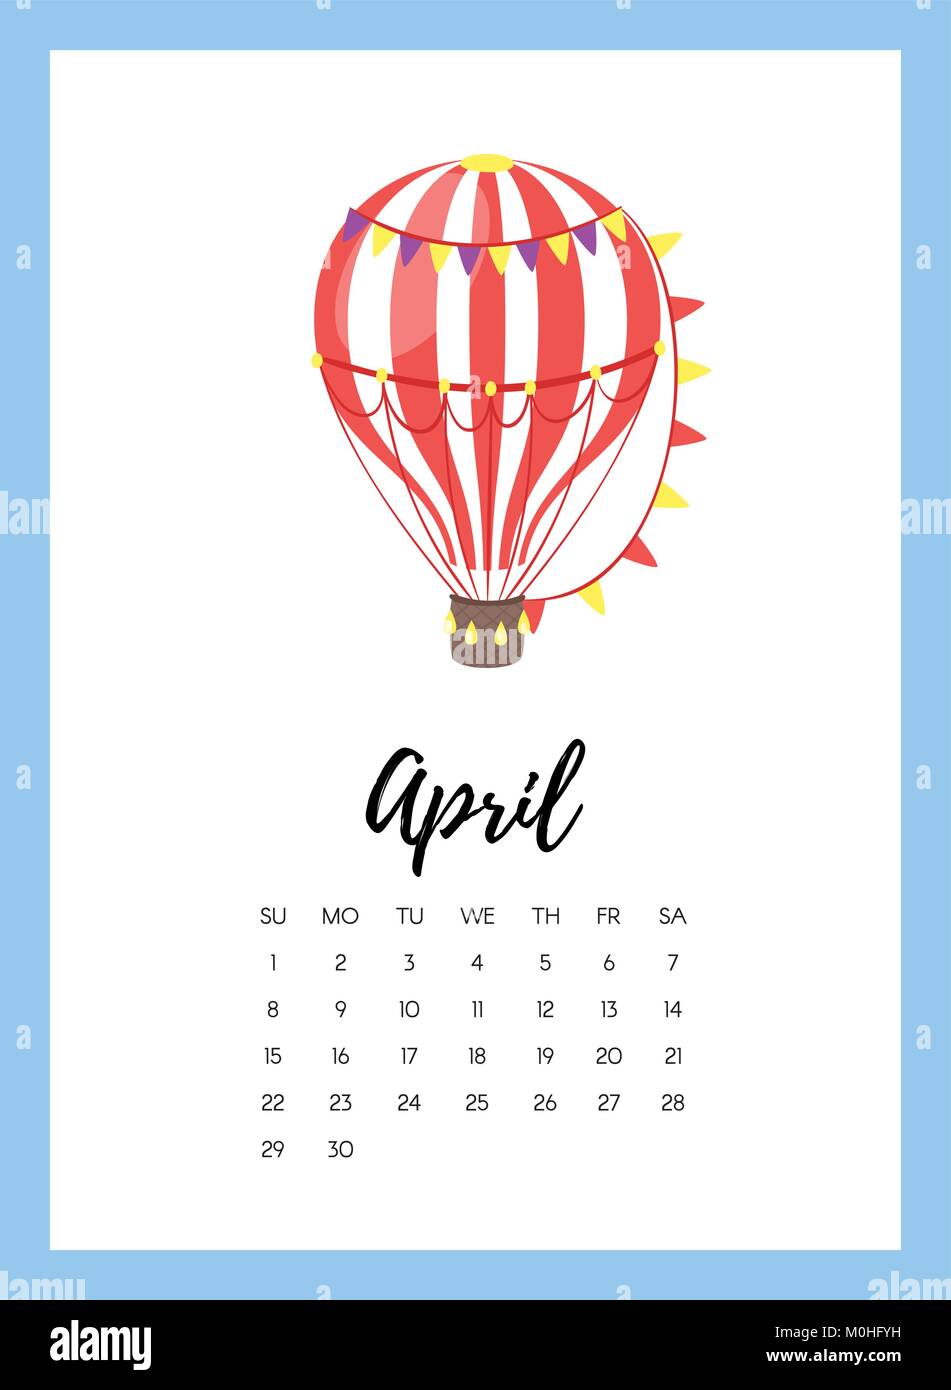 Calendar page april Stock Vector Images - Alamy